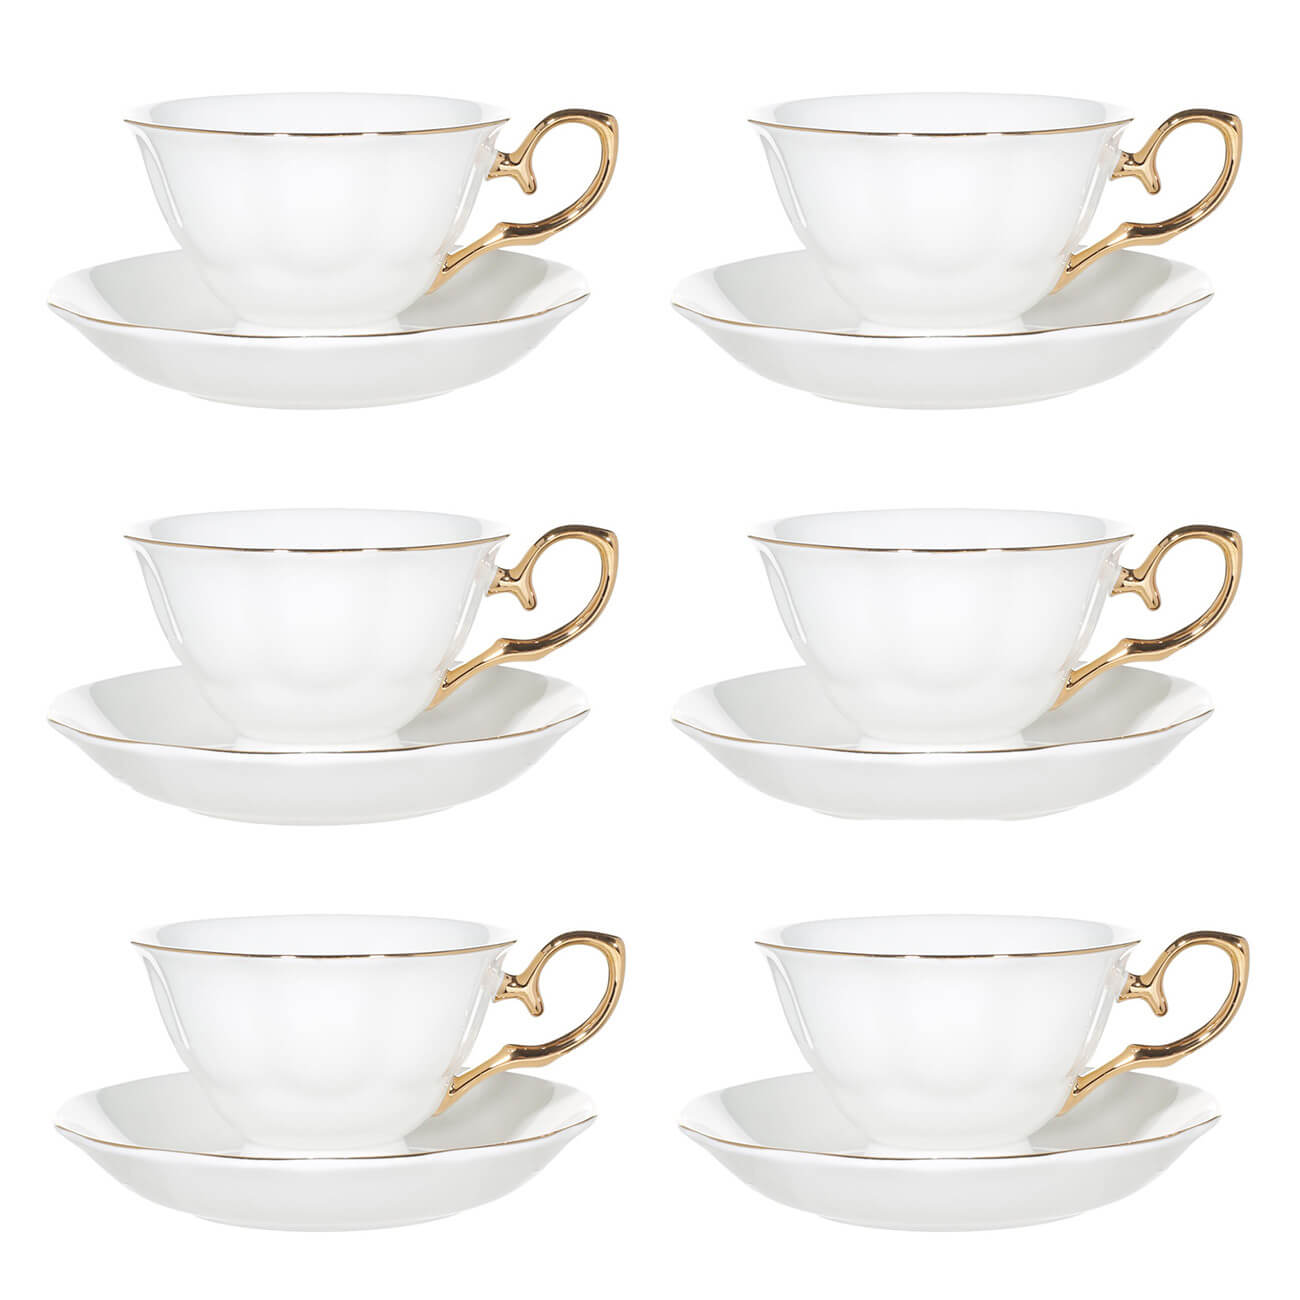 Пара чайная, 6 перс, 12 пр, 180 мл, фарфор F, бело-золотистая, Premium Gold premium gold кофейная пара 6 шт